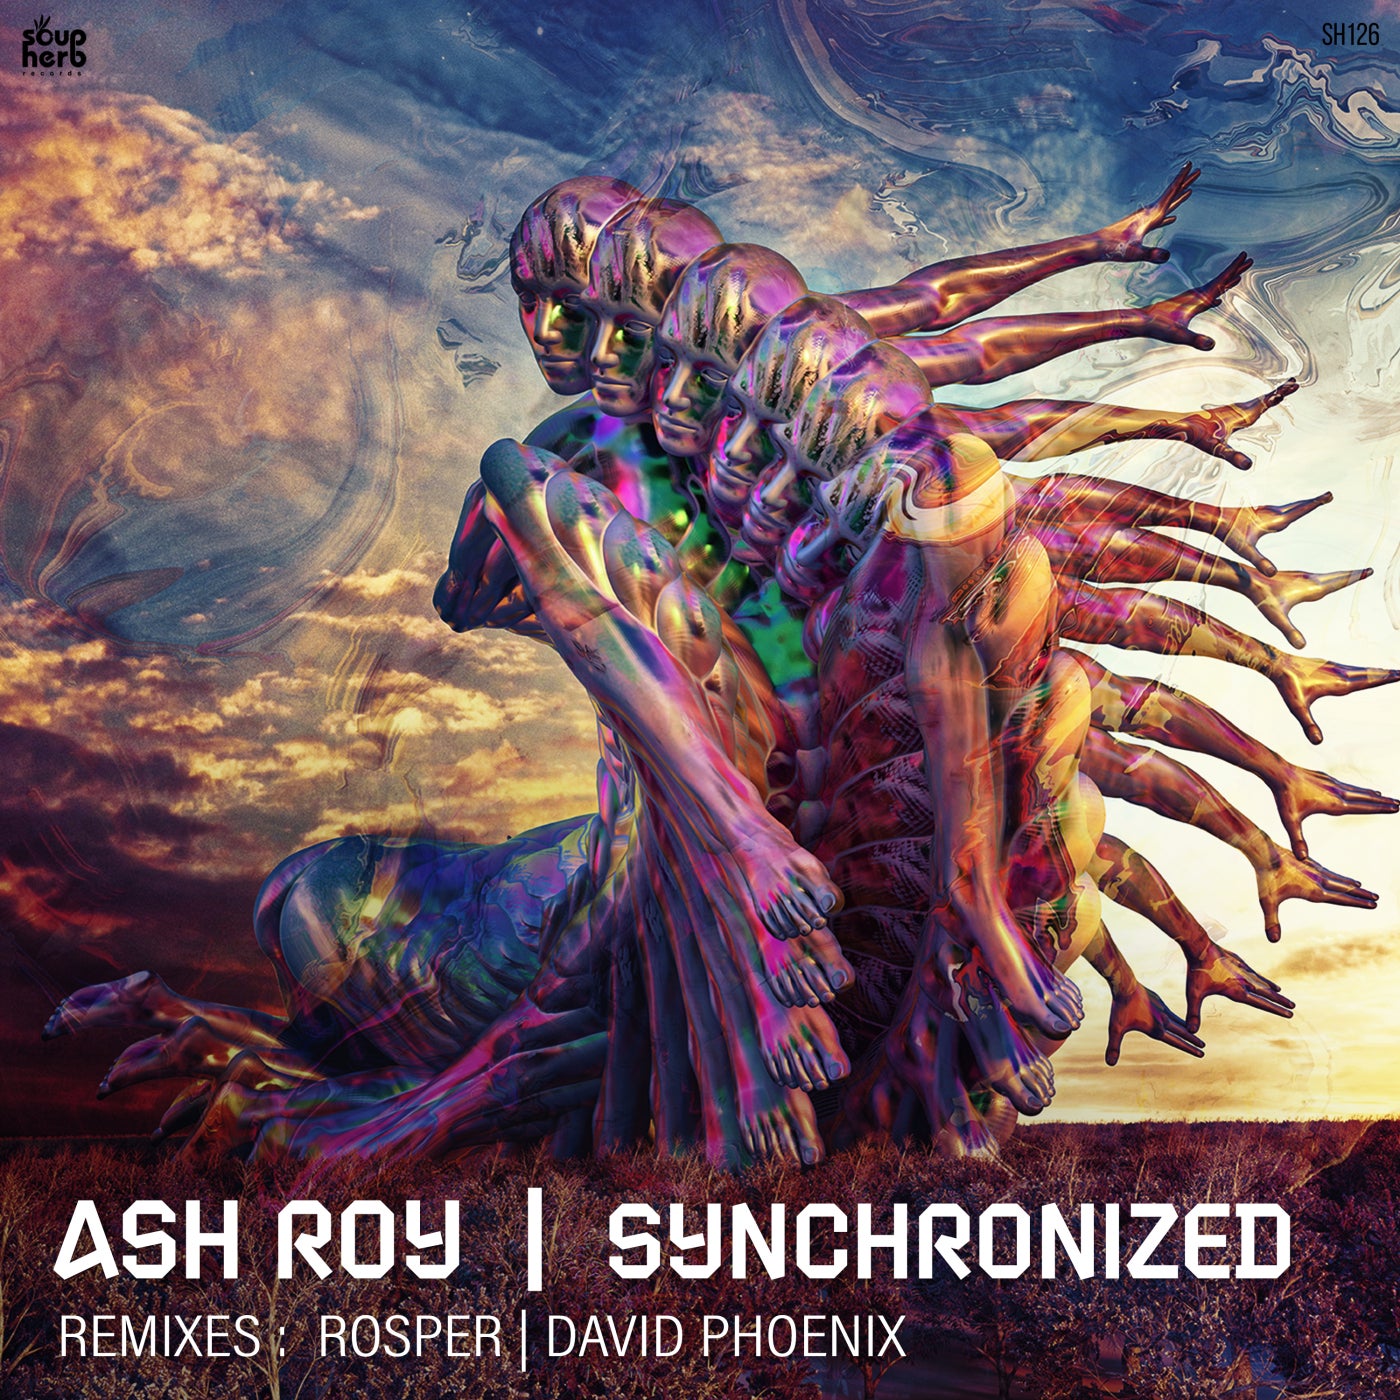 Ash Roy - Synchronized [SH126]